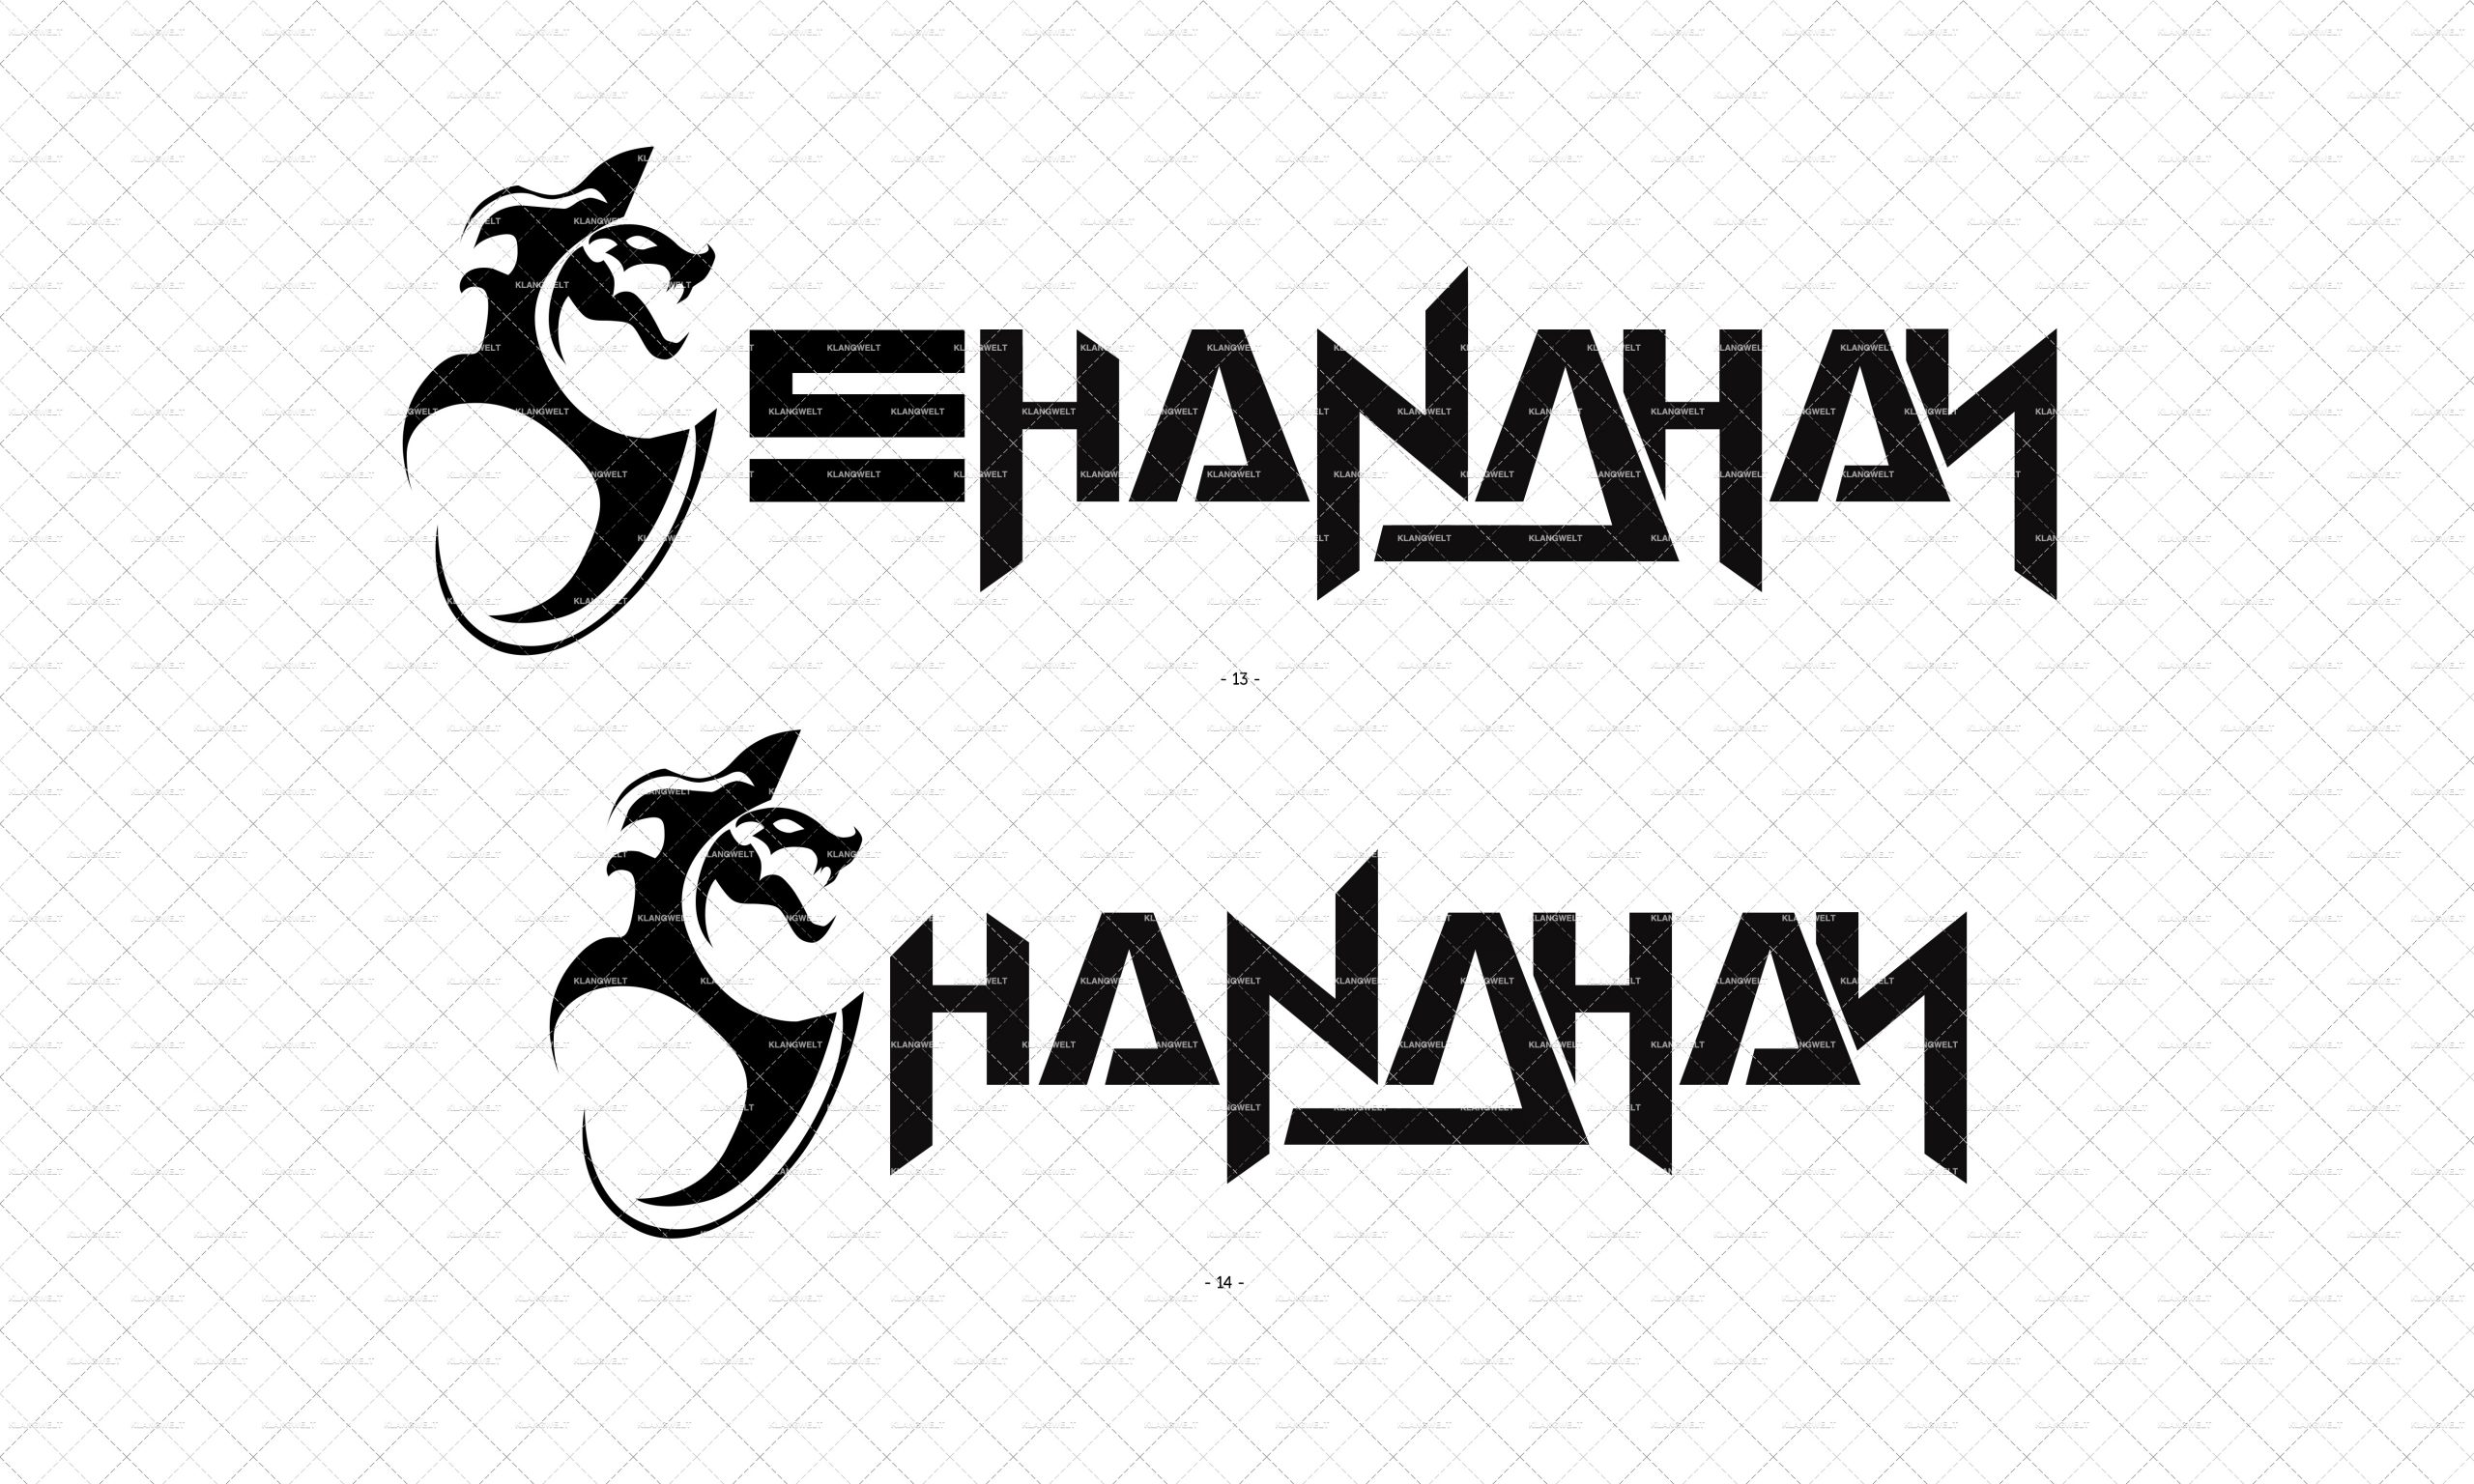 shanahan logo design concepts proposals